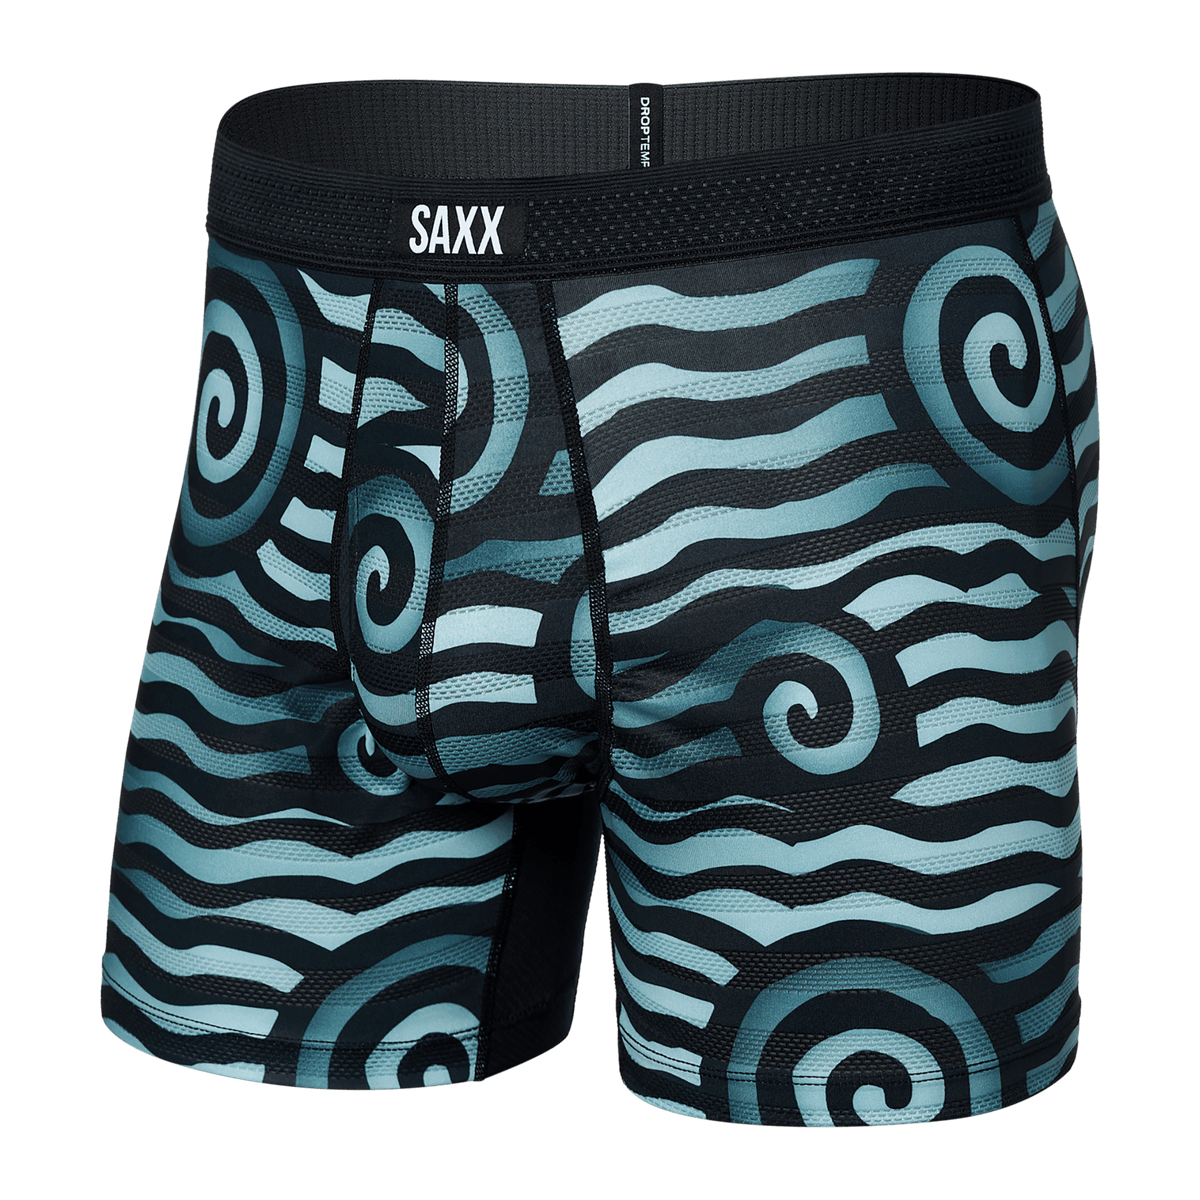 SAXX Men's Underwear - DROPTEMP™ COOLING HYDRO Boxer Briefs - Black, X-Large